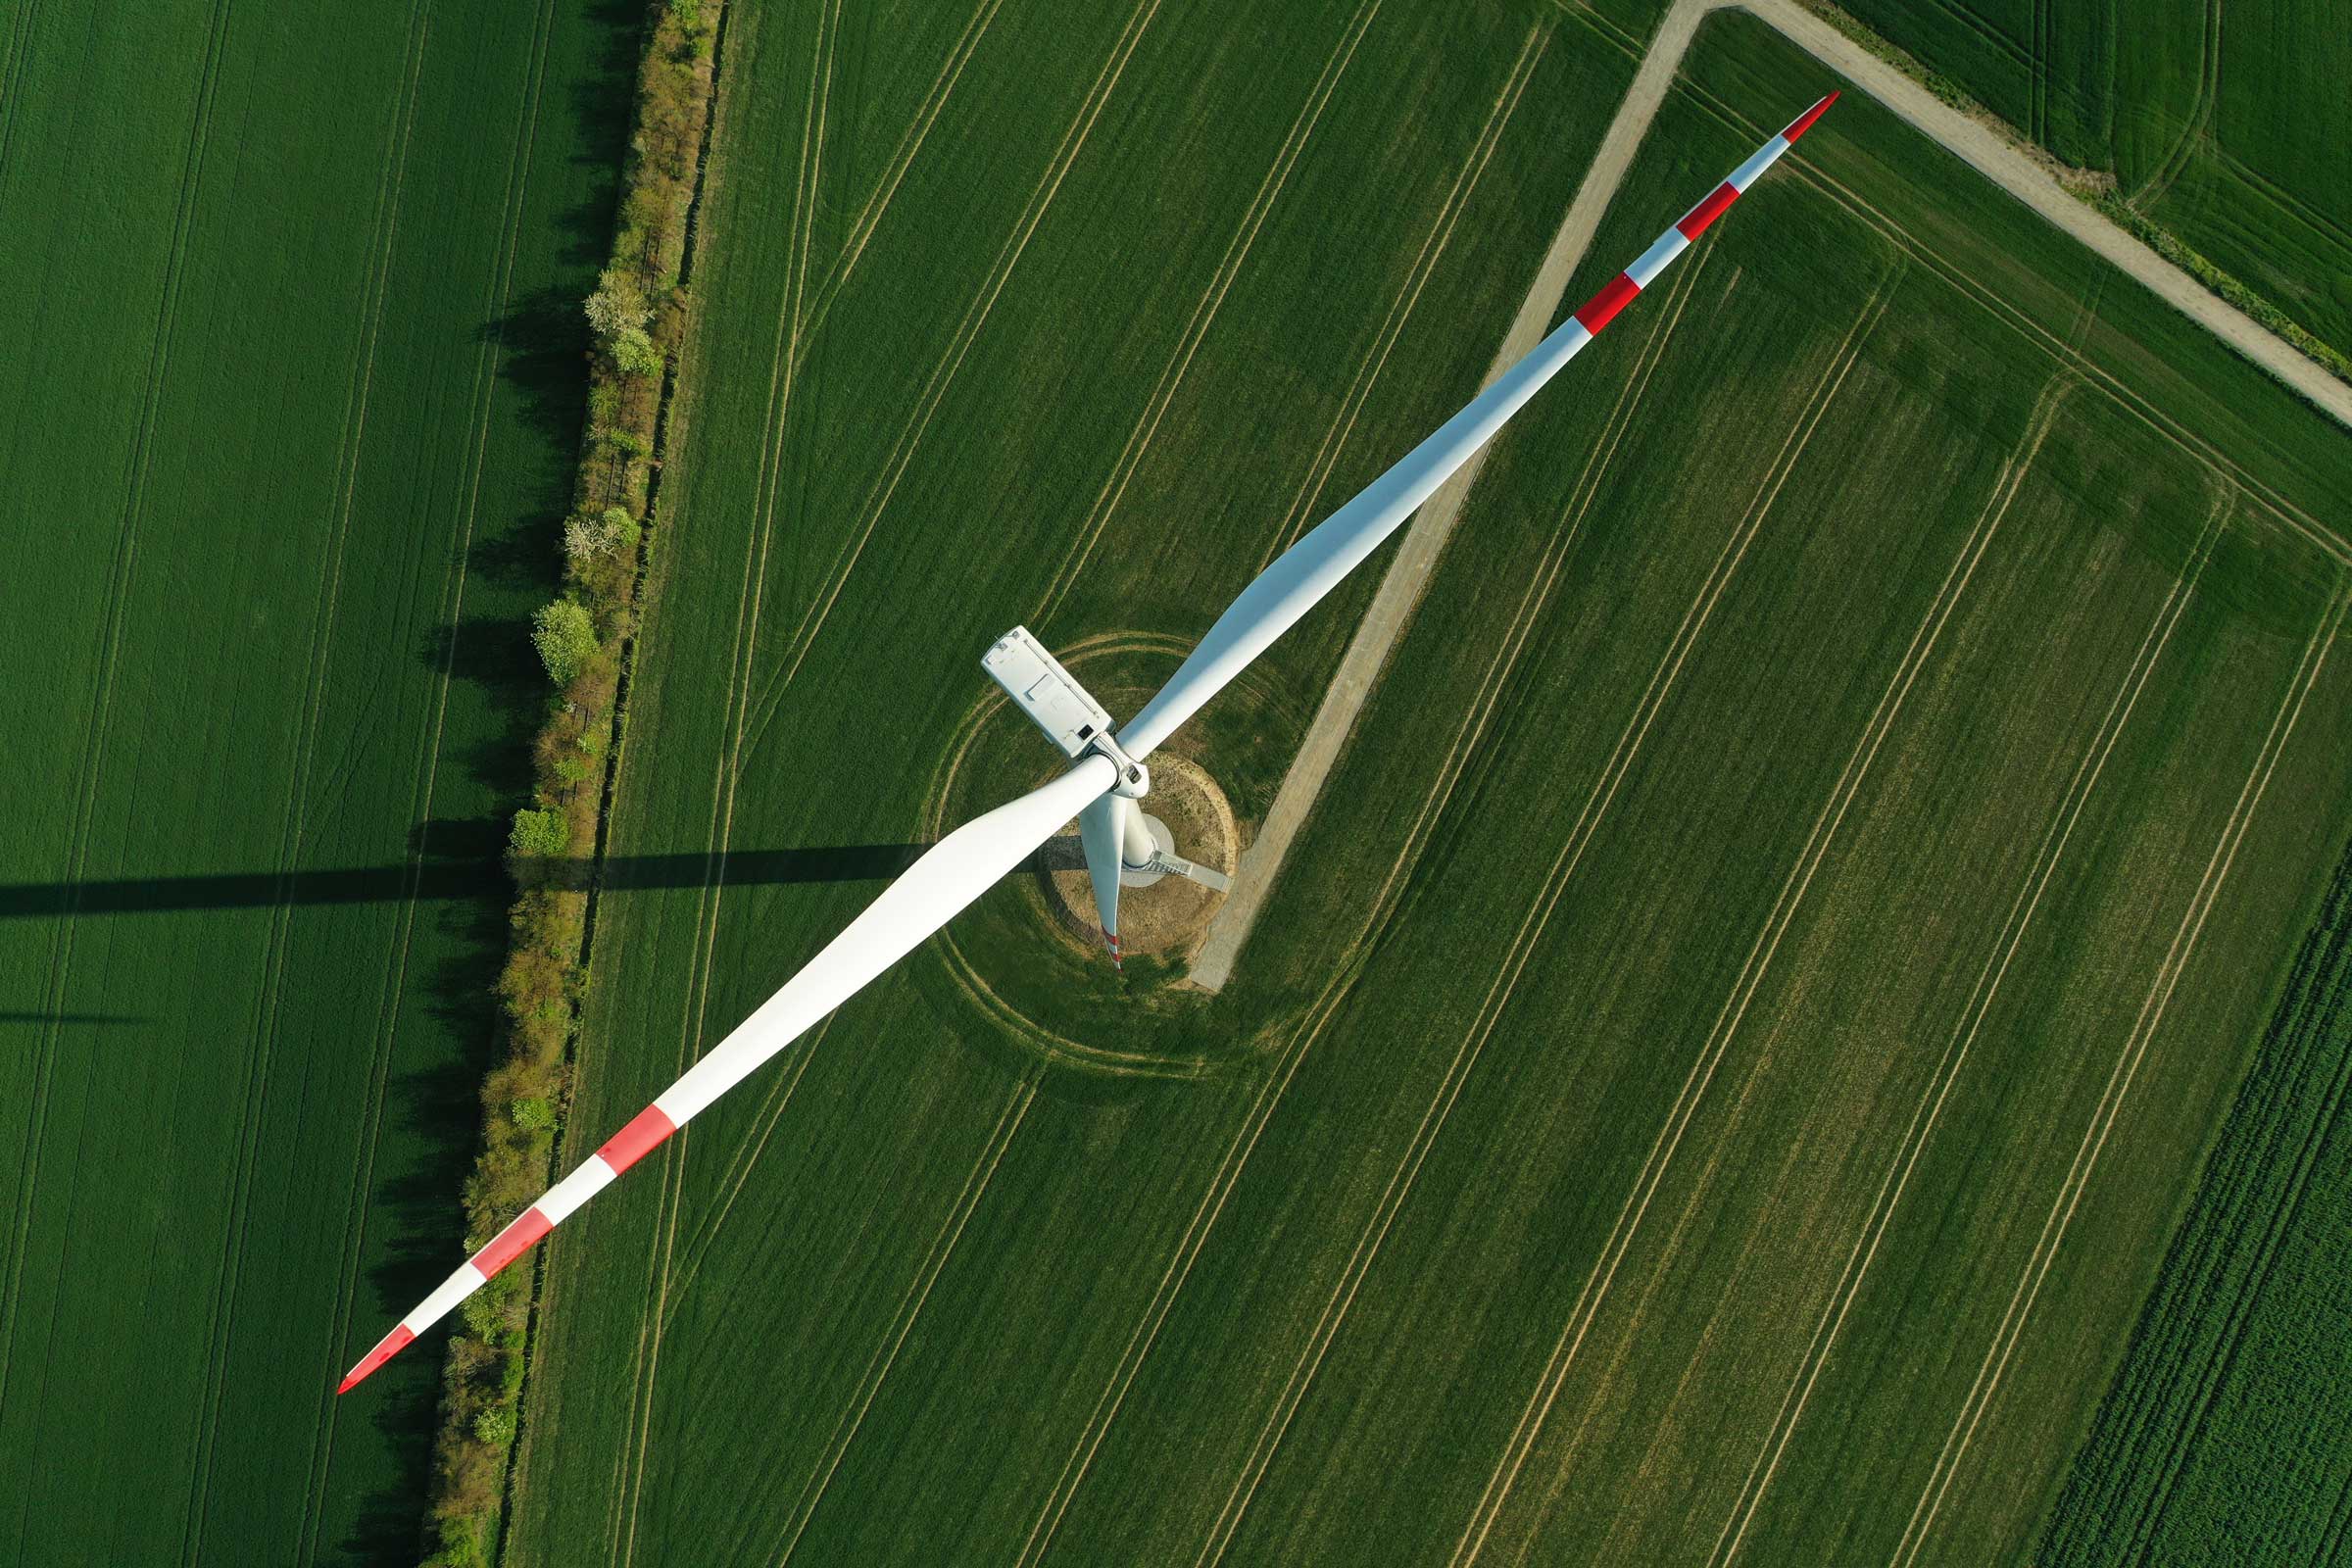 Overhead view of a wind turbine